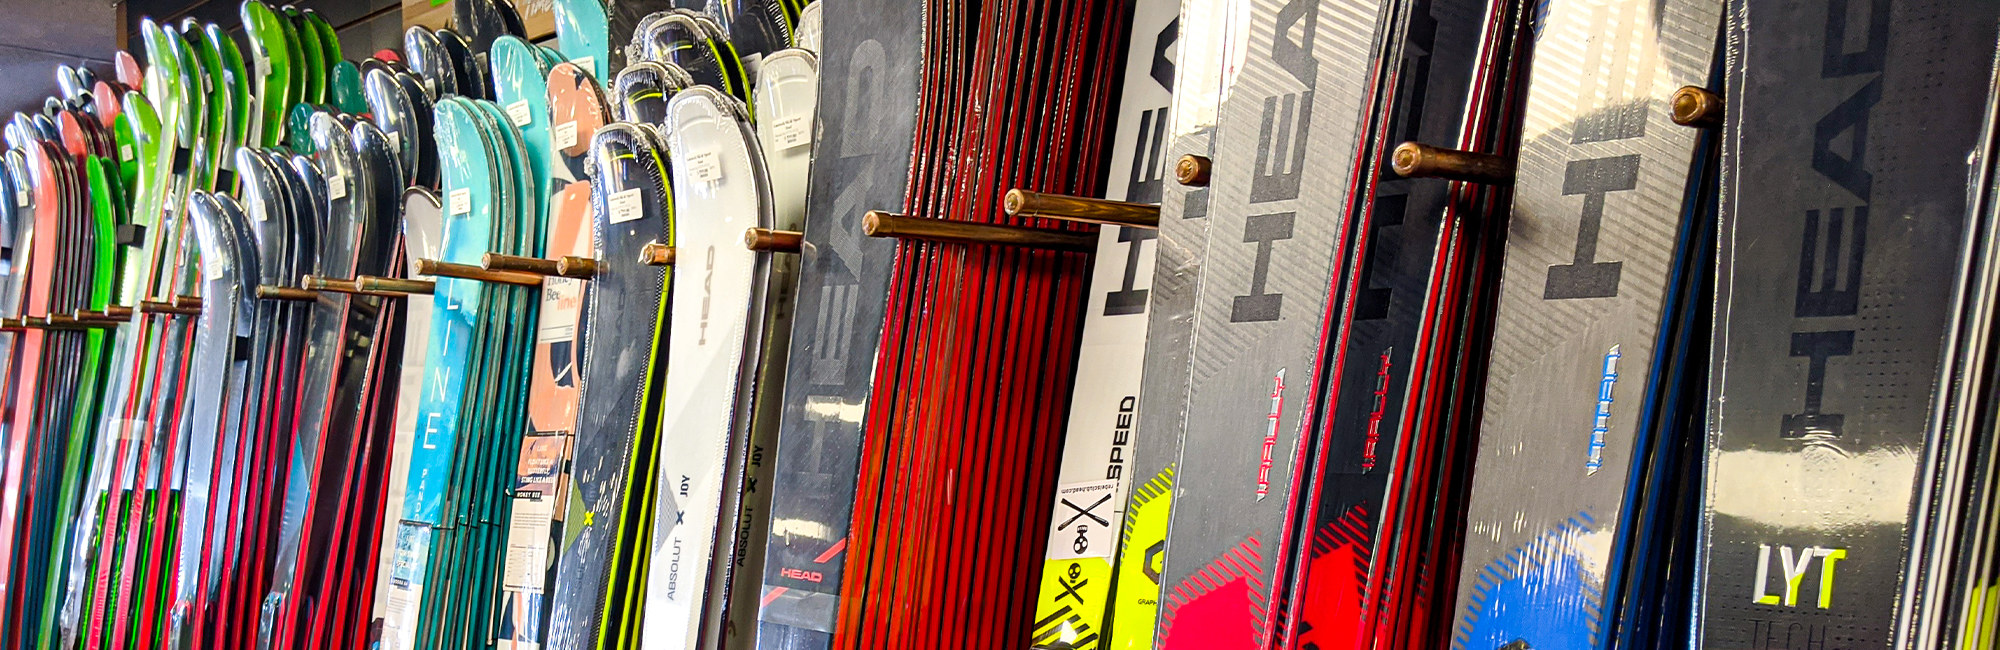 Gunstock Ski & Sport Shop | Skis Snowboards for Sale Gear